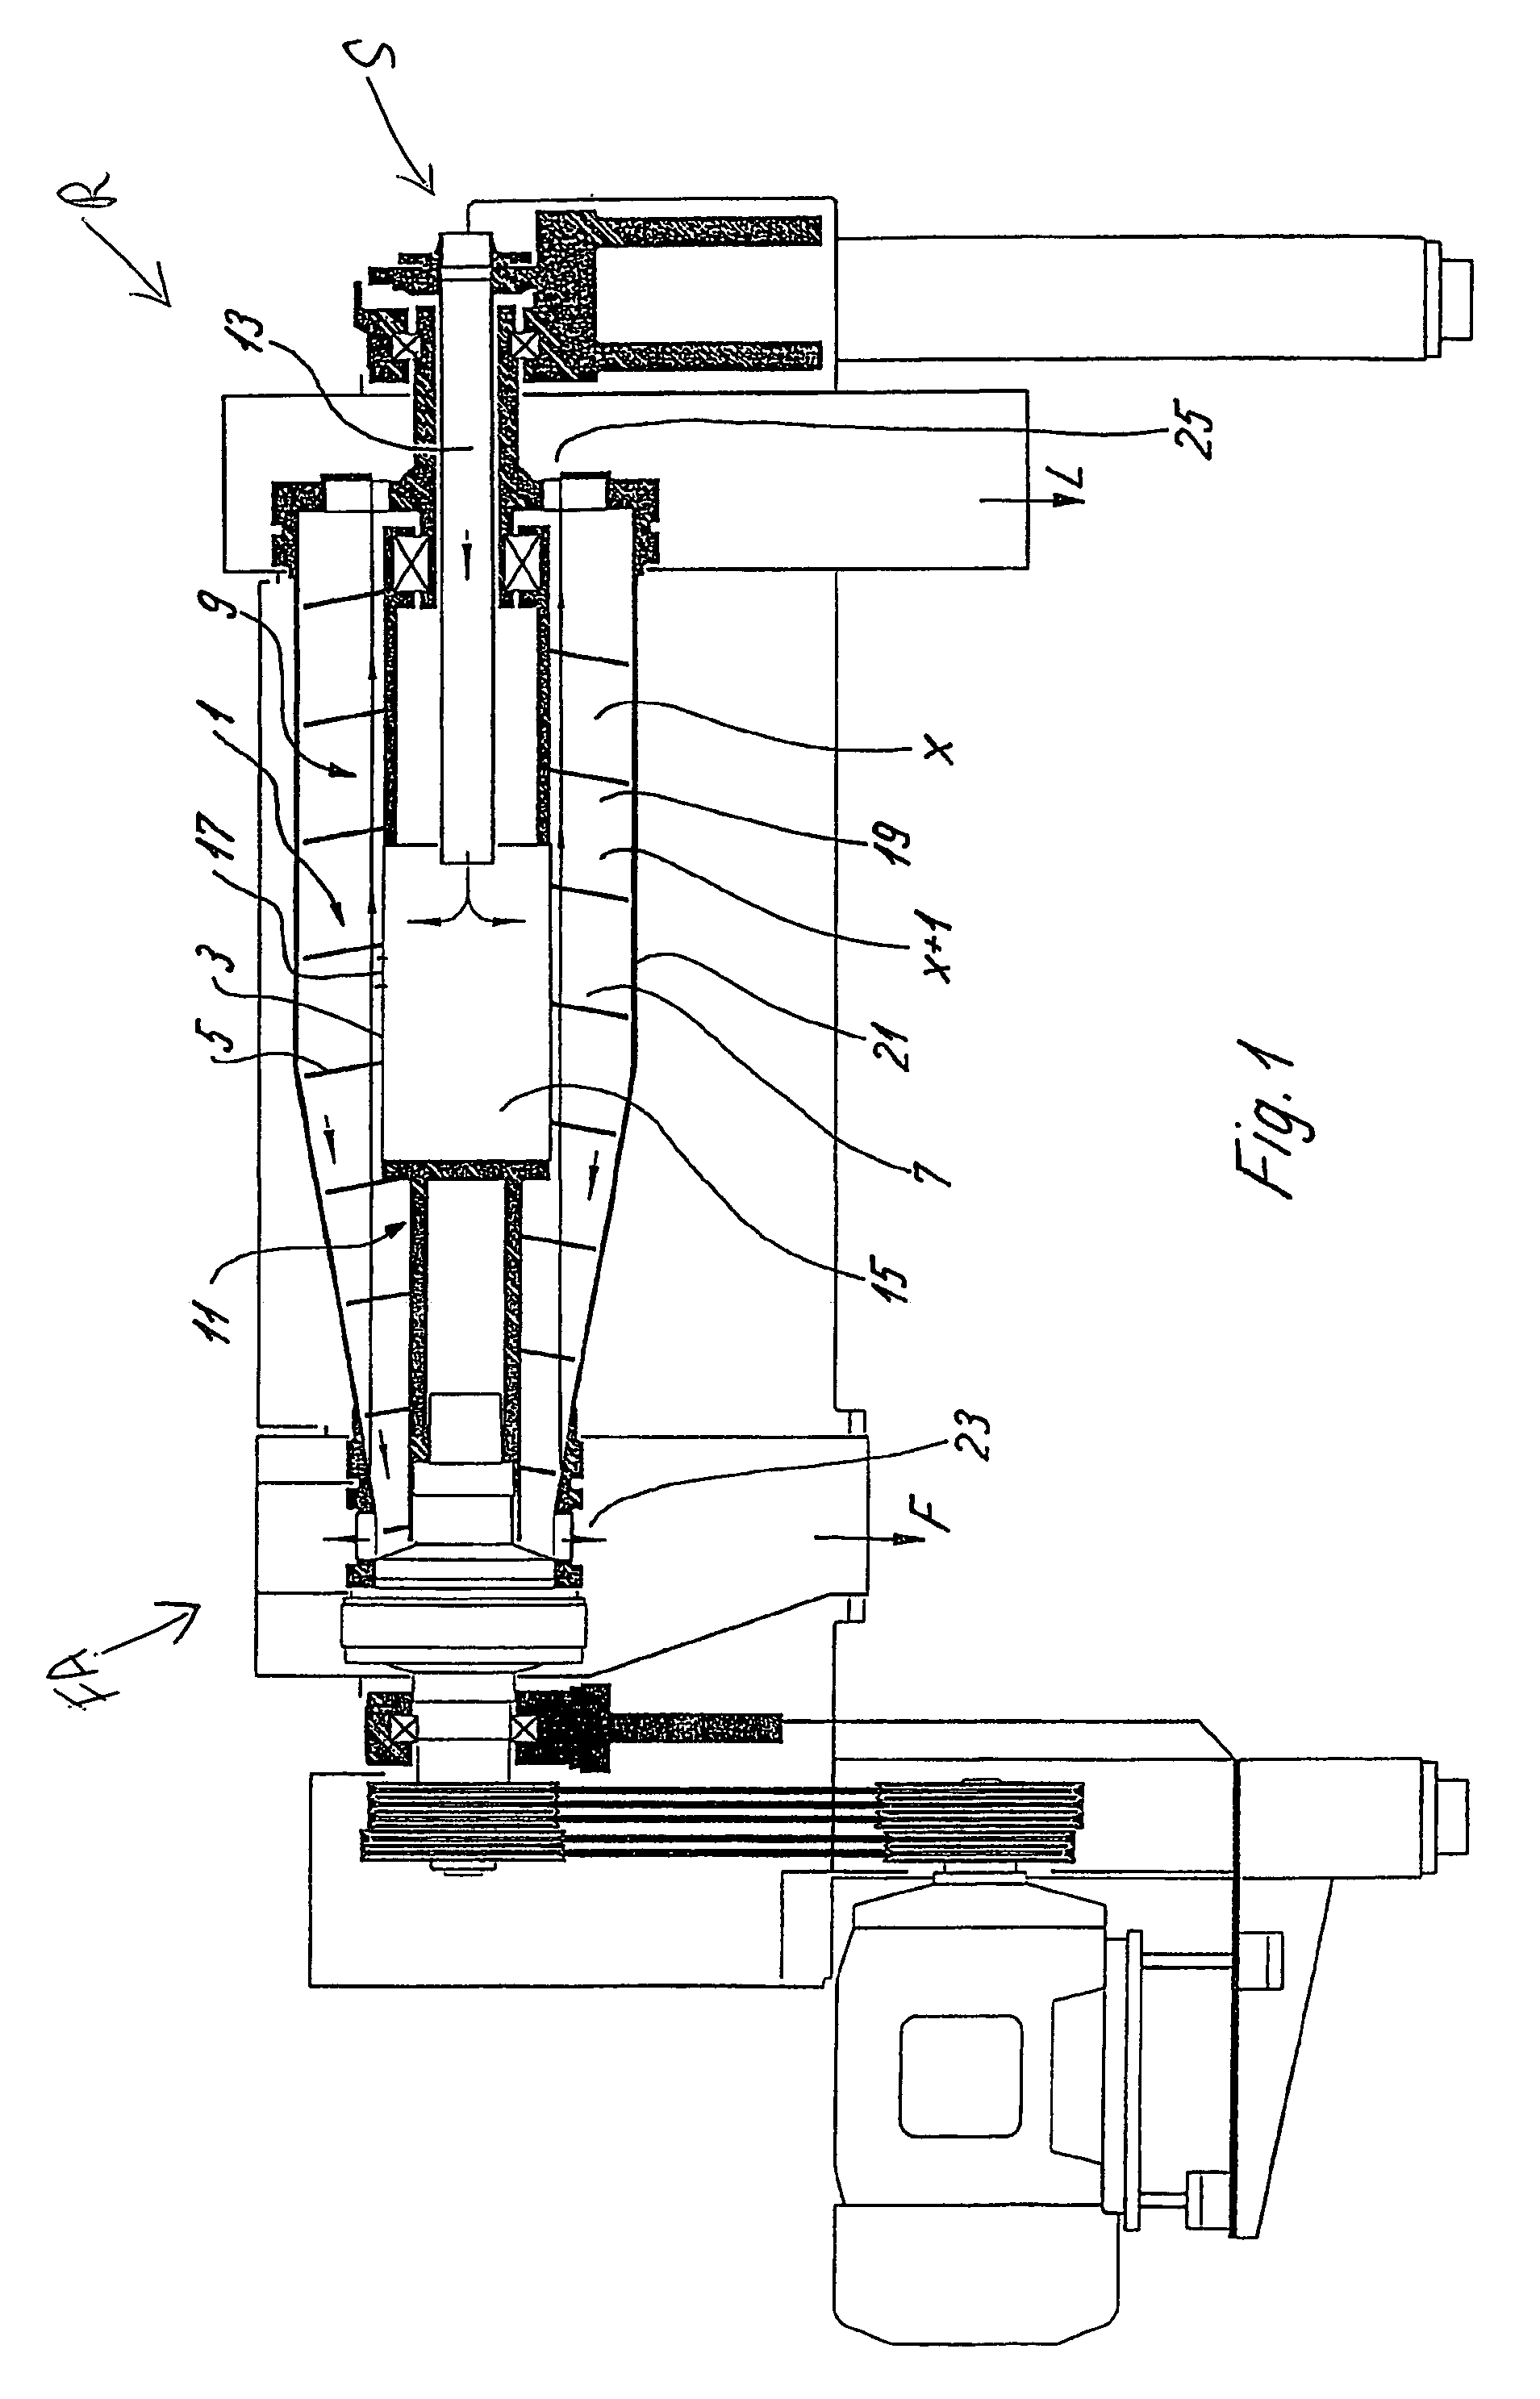 Solid bowl screw centrifuge comprising a distributor